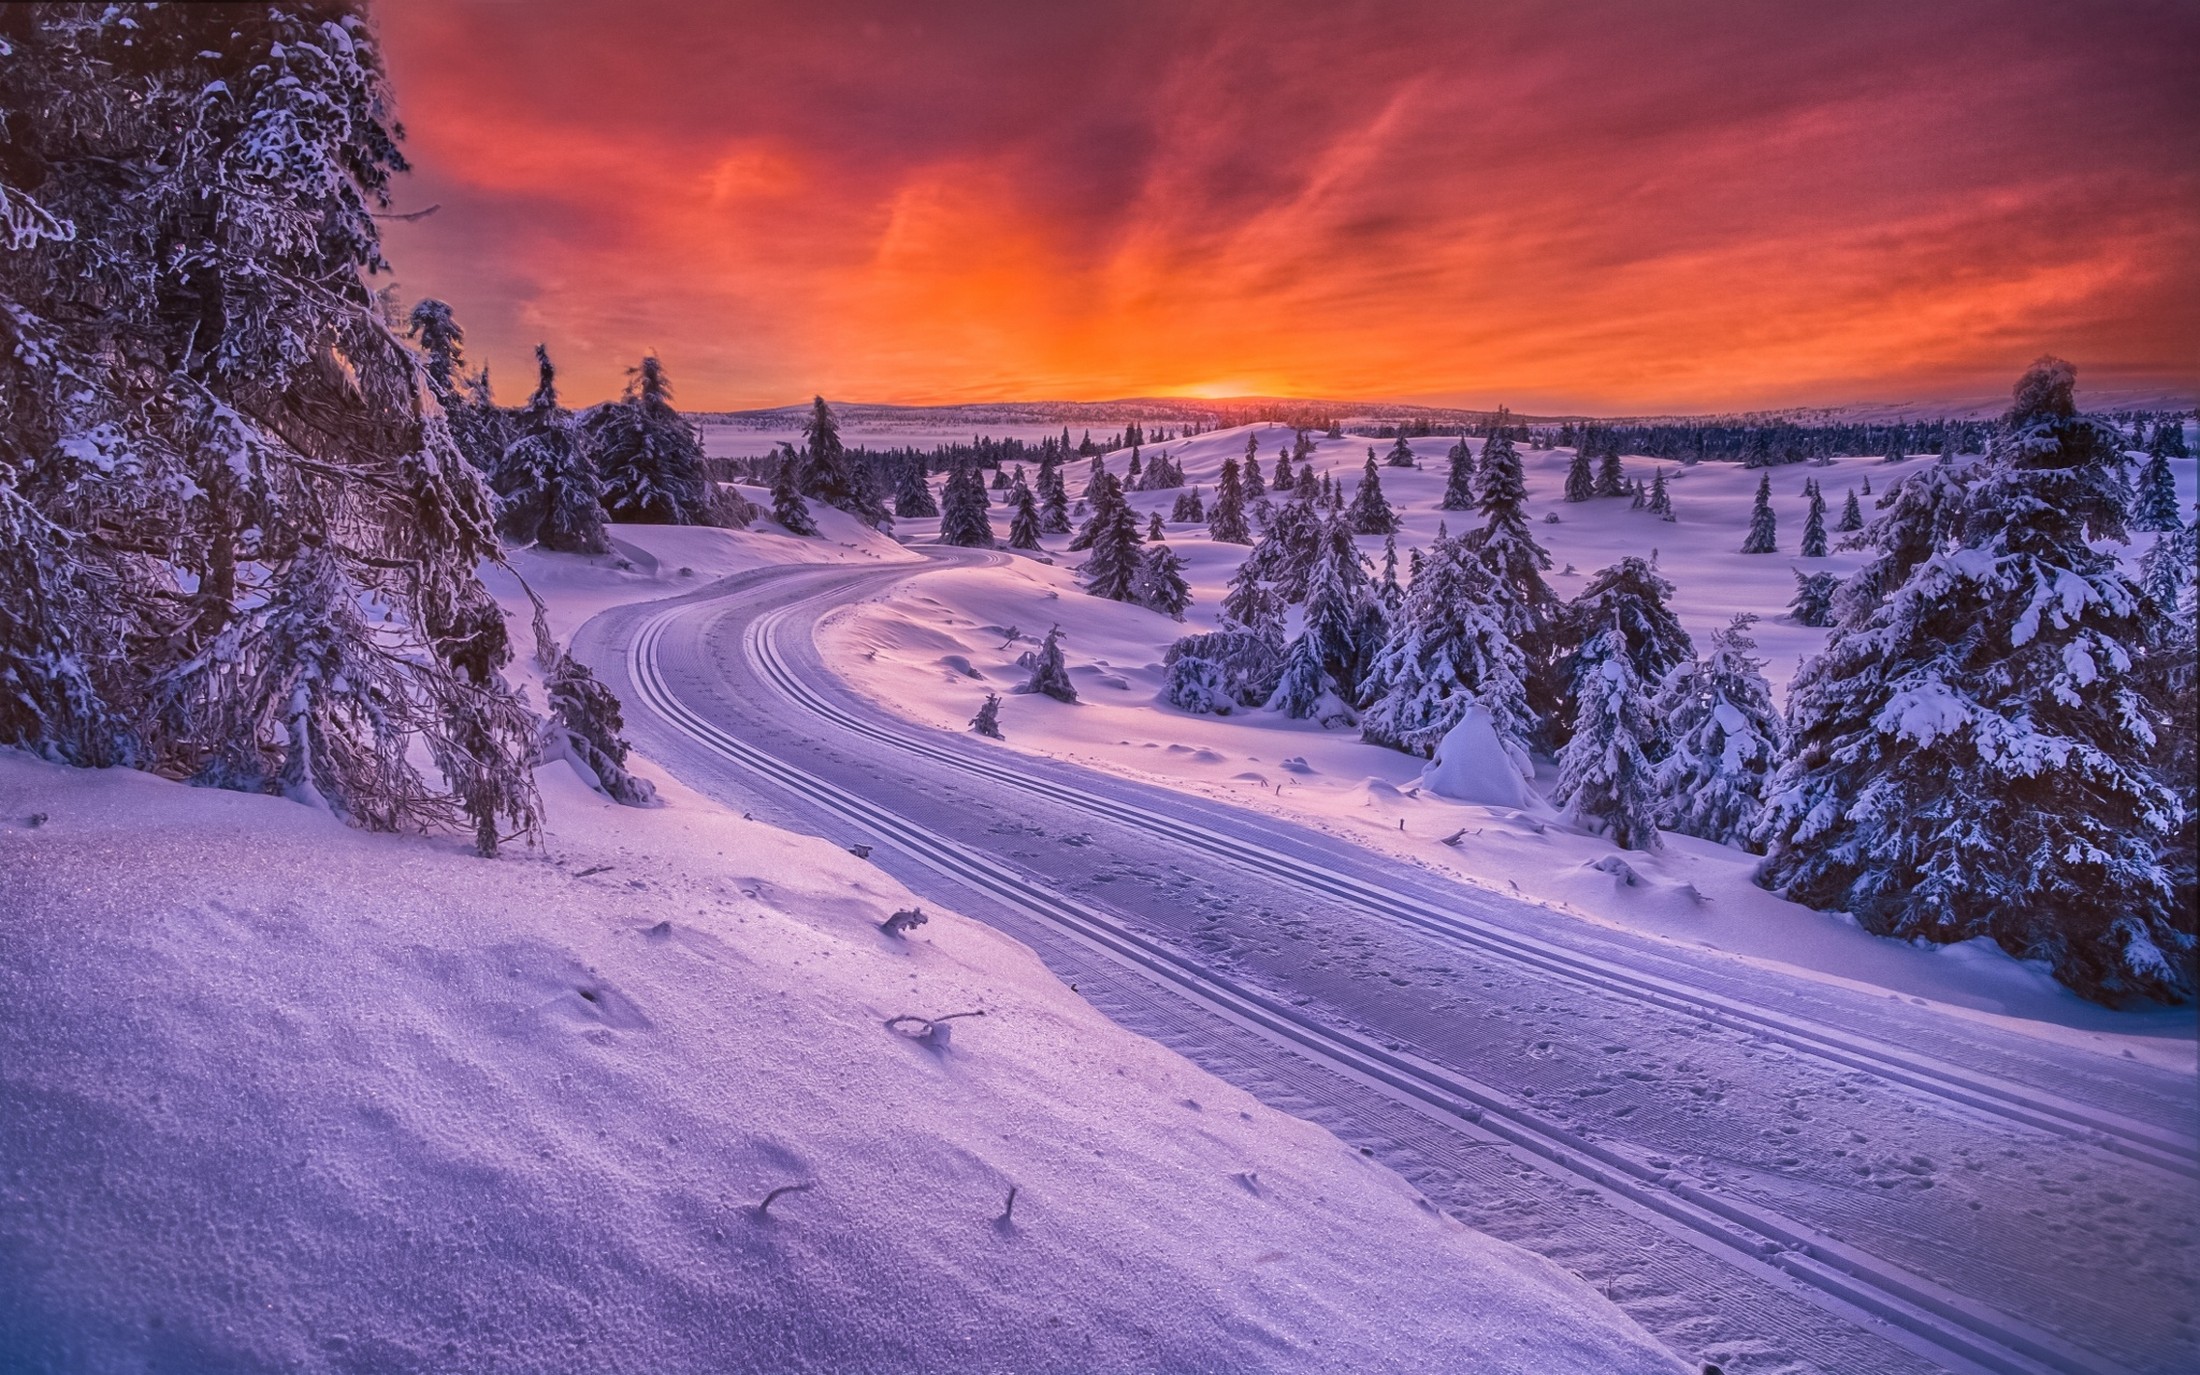 General 2200x1375 landscape Norway forest road snow sky trees winter cold white orange orange sky nordic landscapes